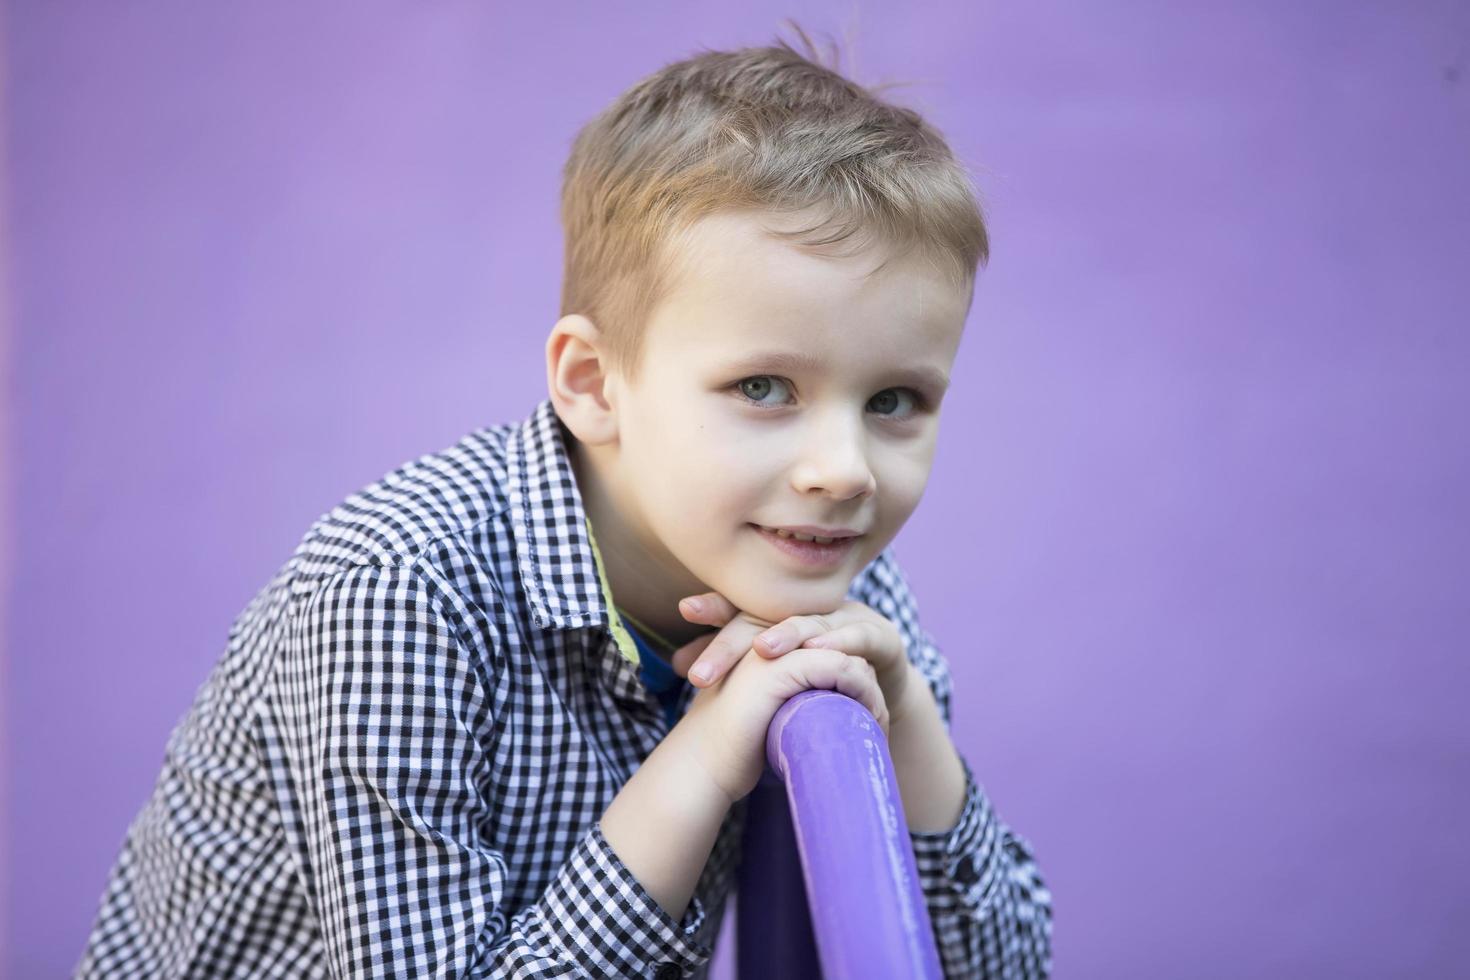 Six year old boy. Primary school student. Preschooler. Child on a purple background. photo